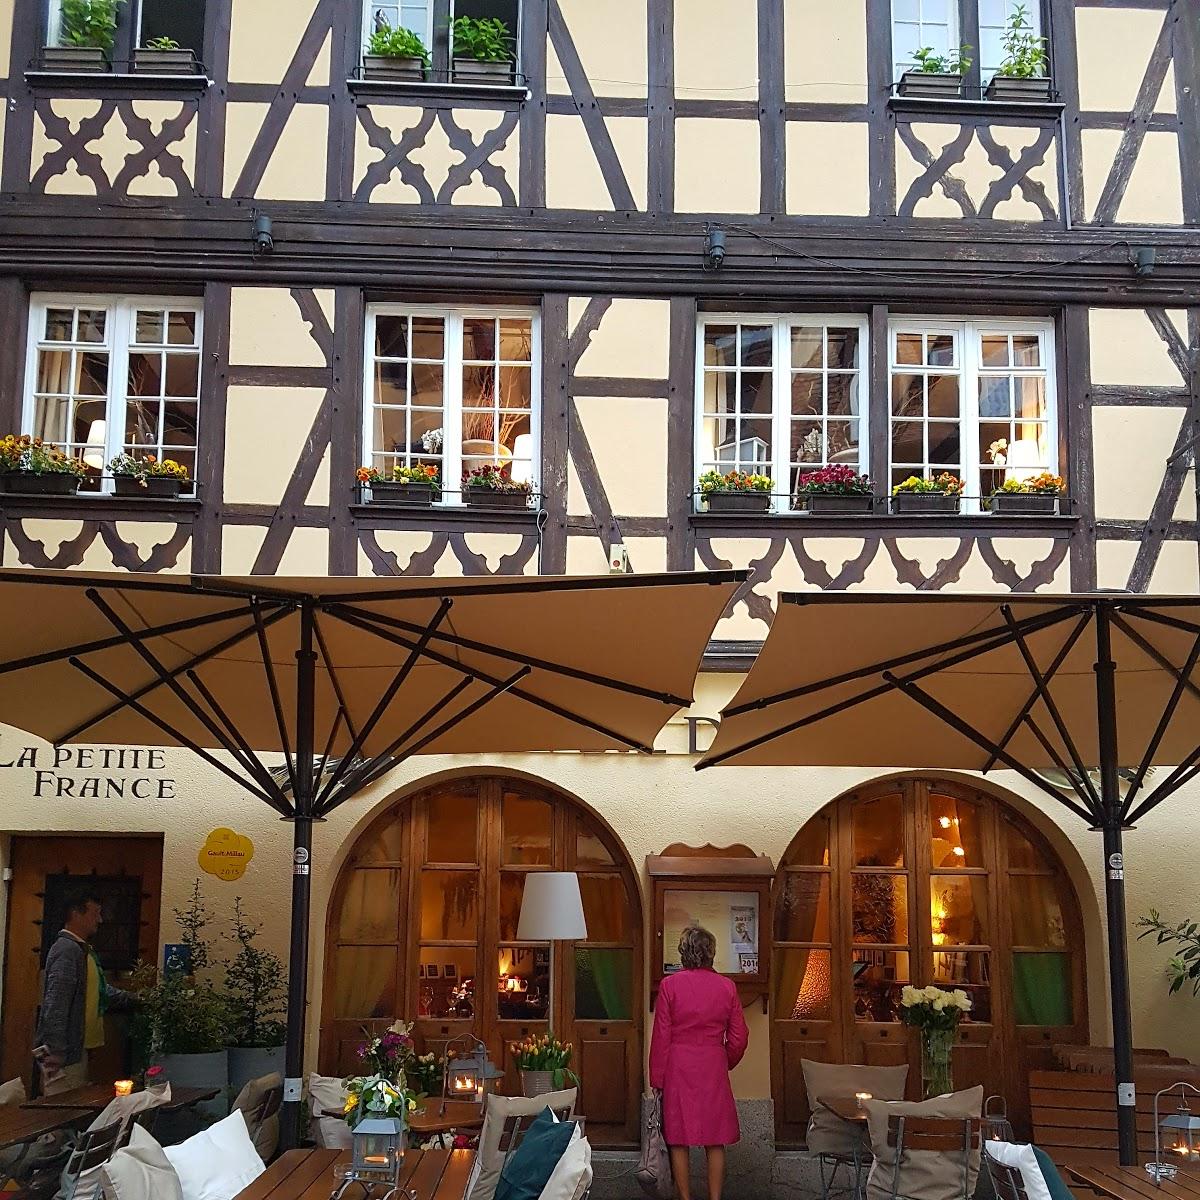 Restaurant "Restaurant Umami" in Strasbourg